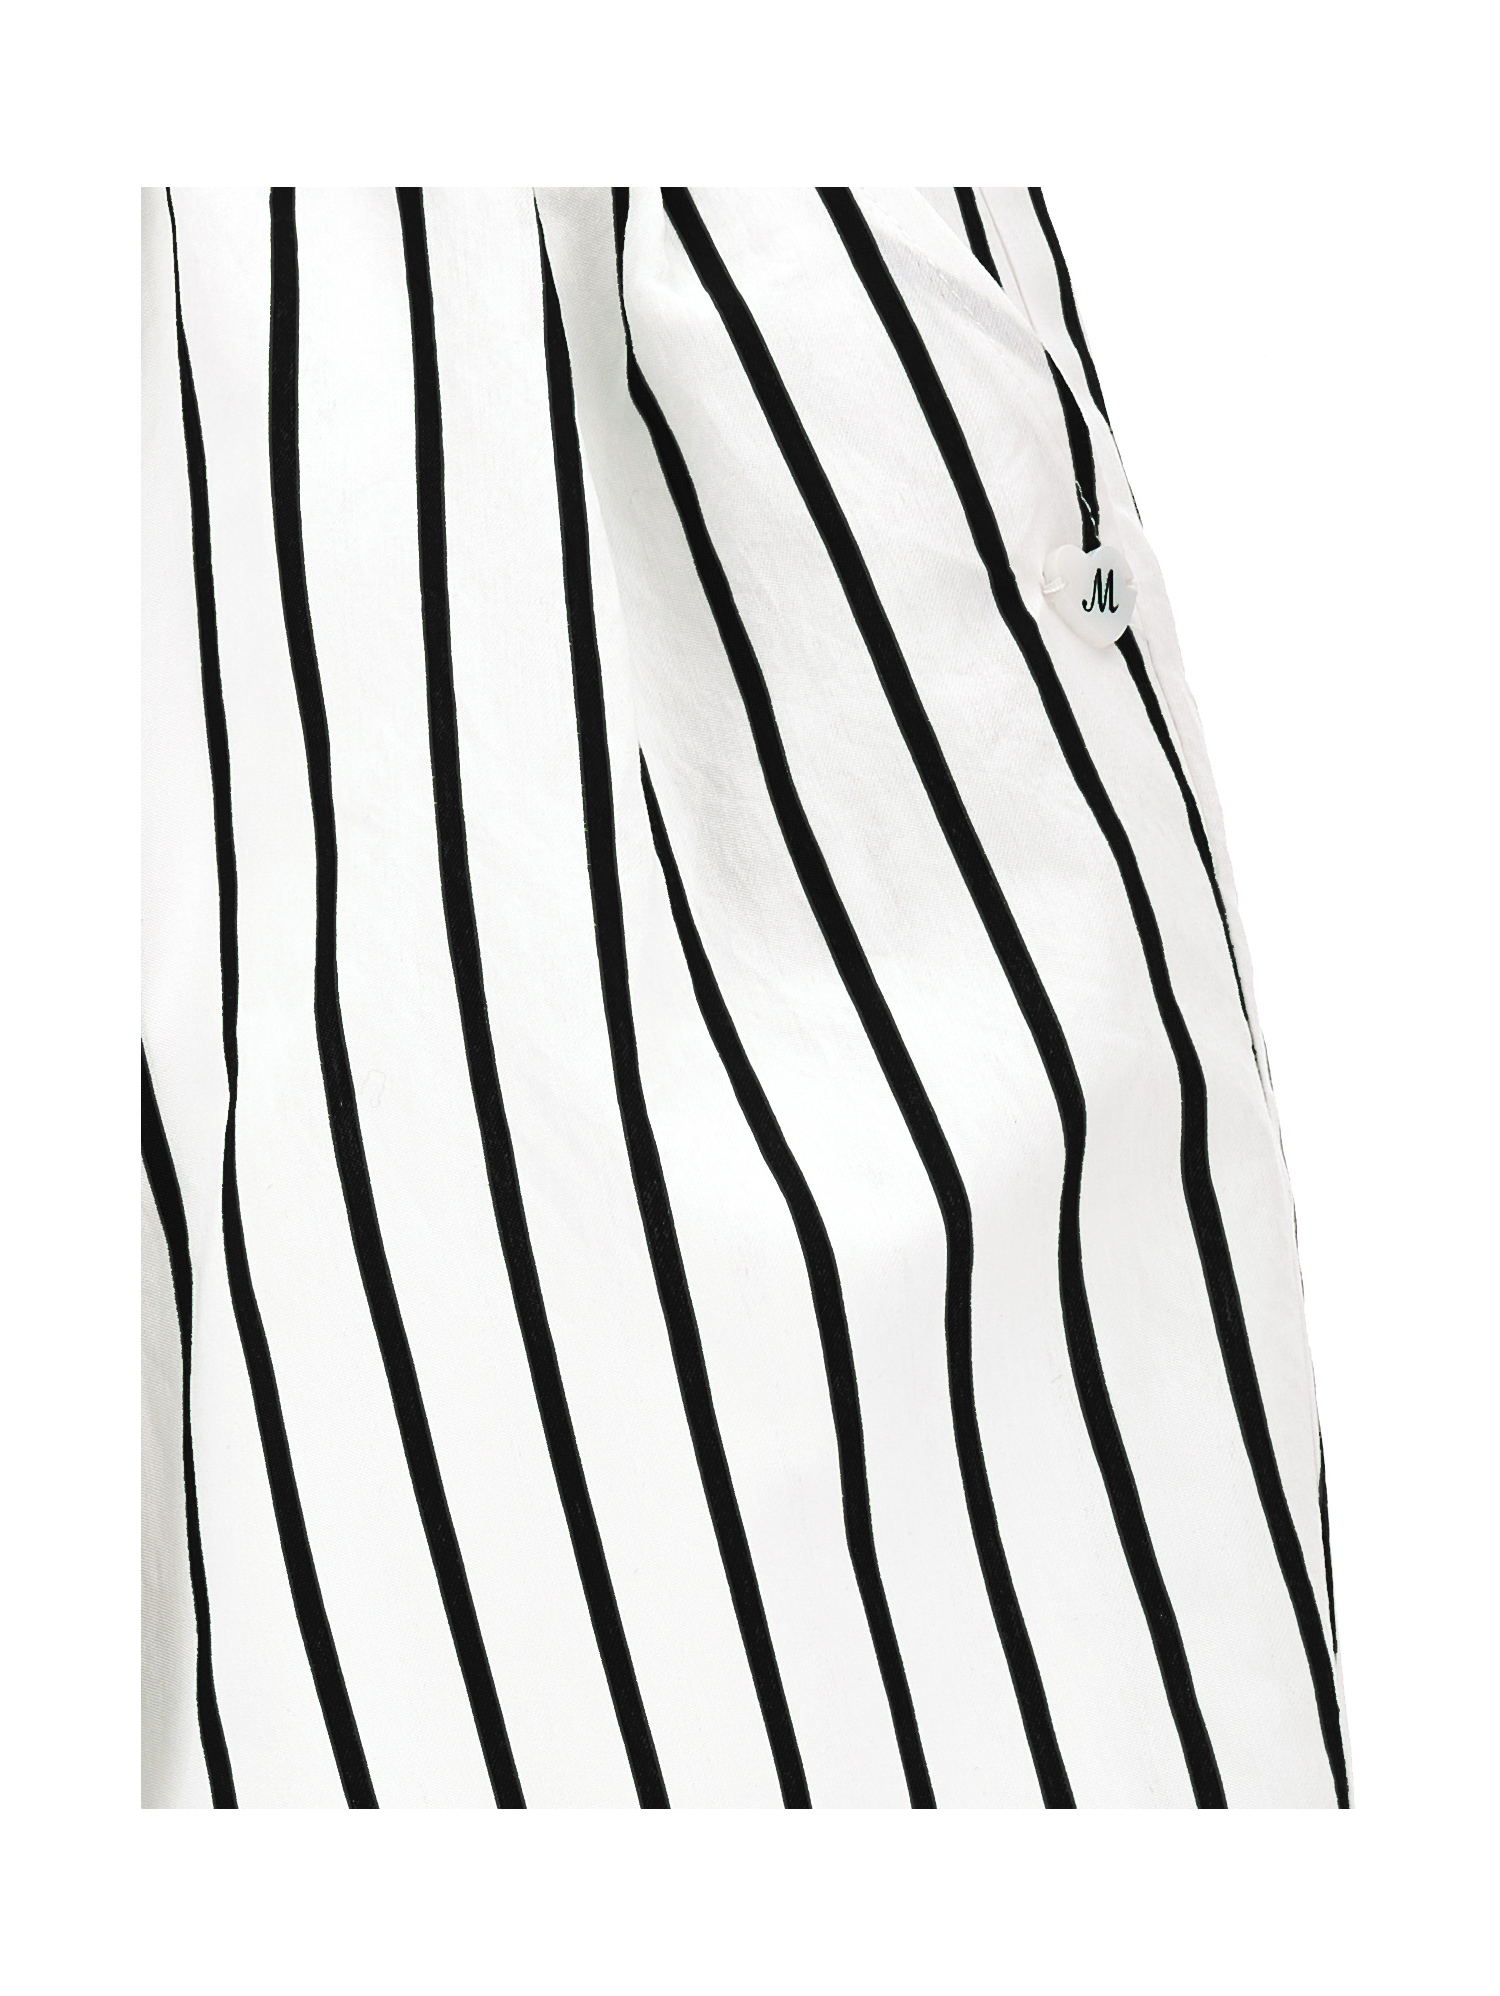 Shop Monnalisa Comfy Alternate Stripe Trousers In White + Black